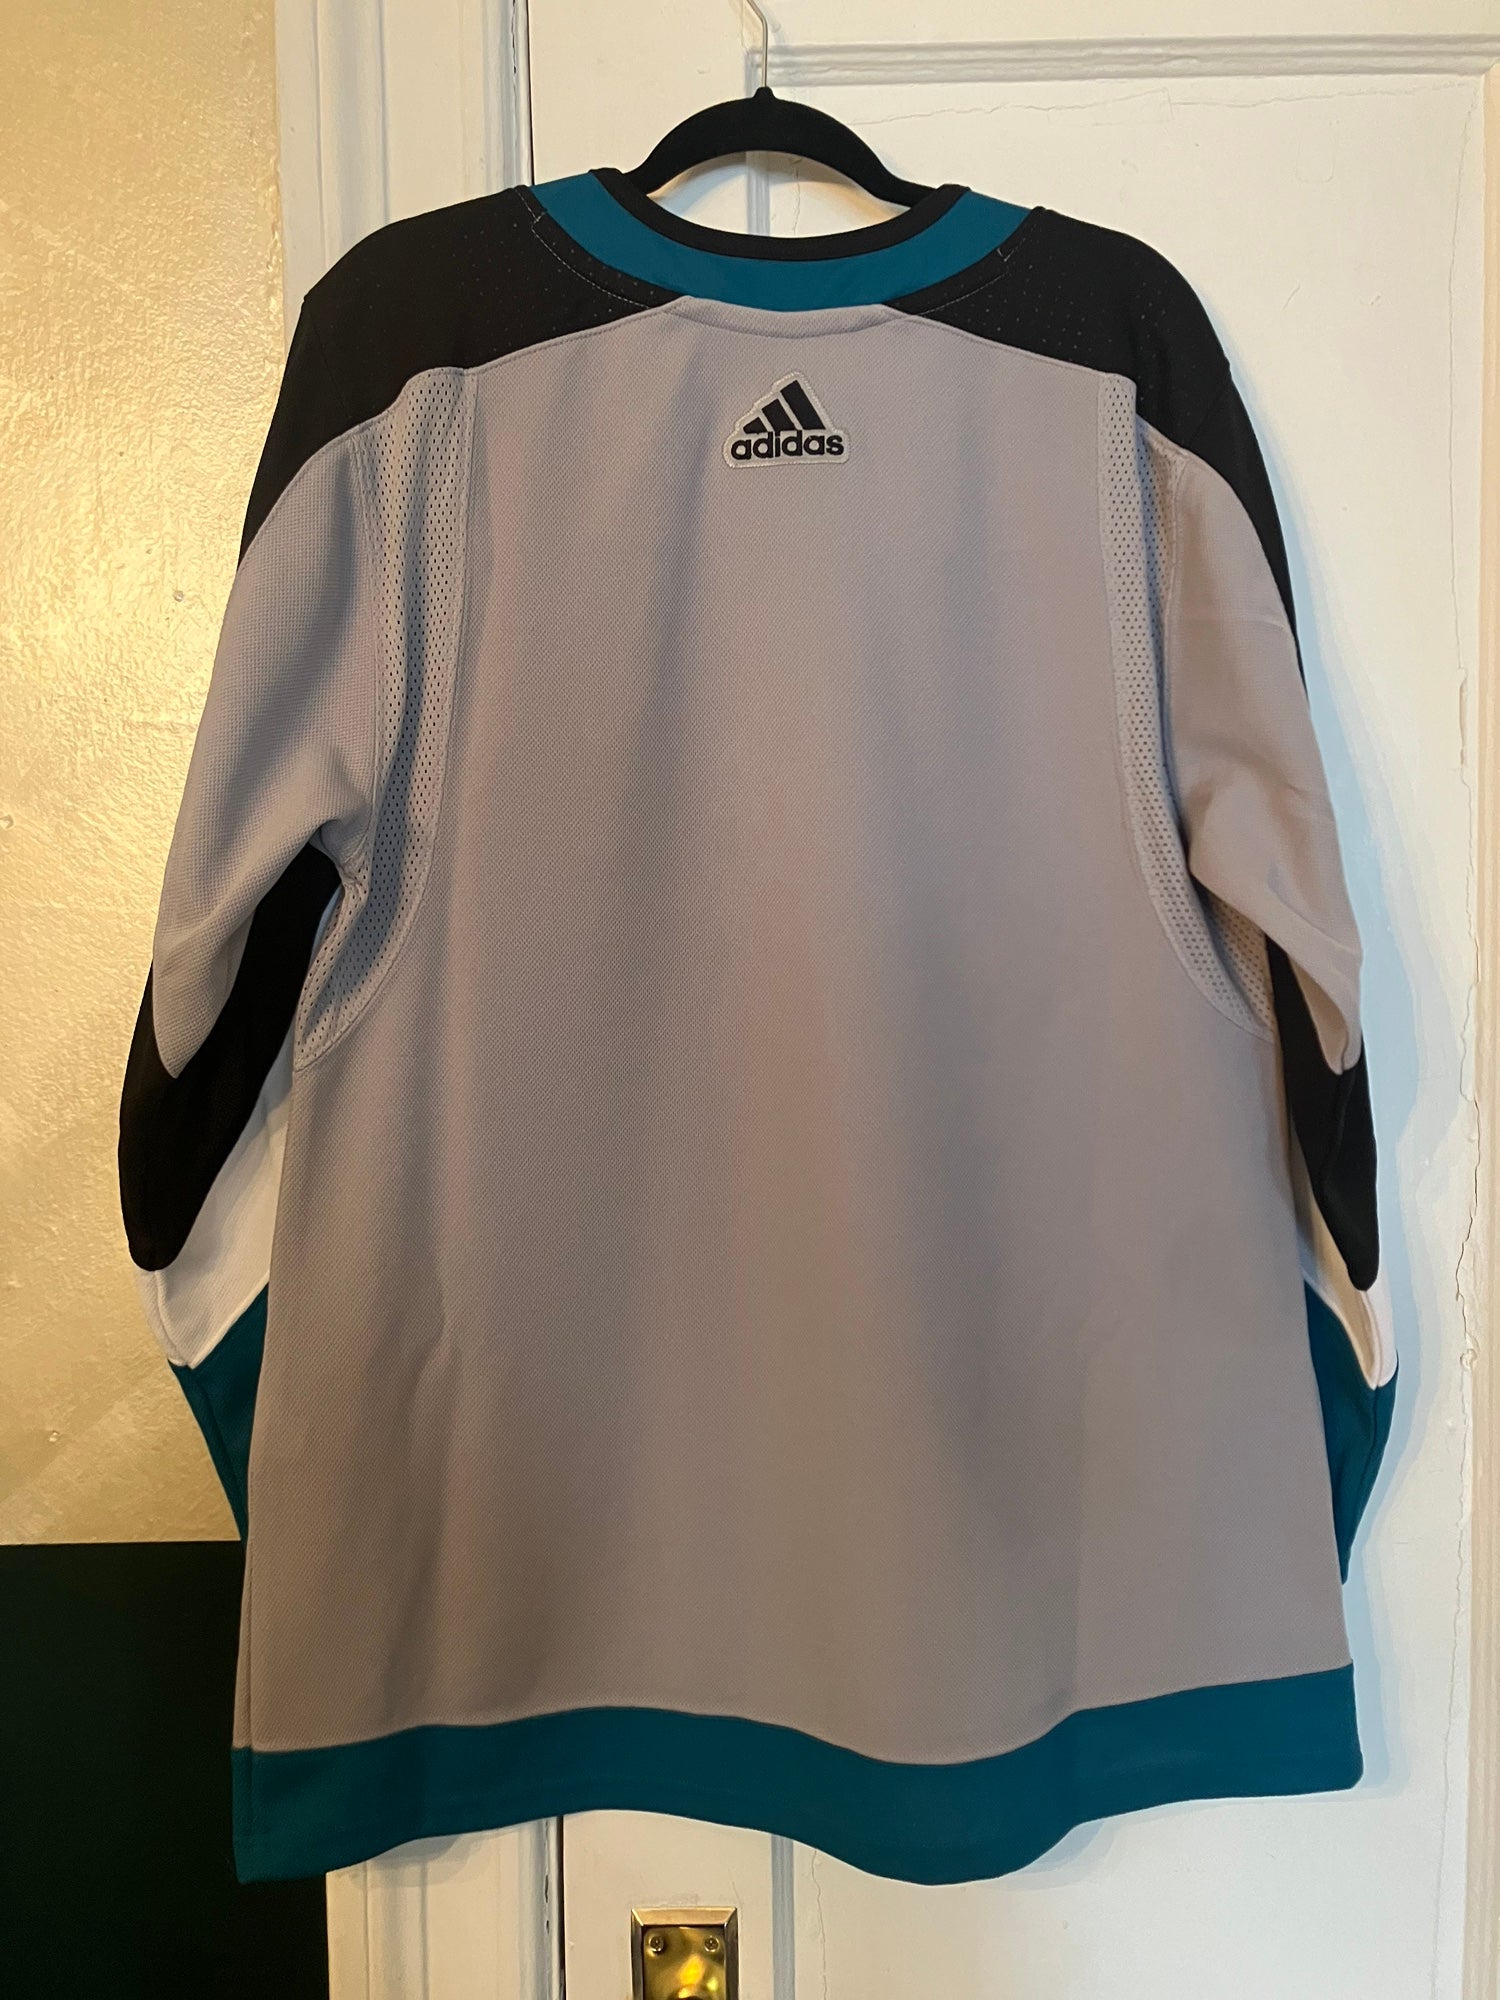 Nashville Predators adidas NHL Men's adizero Road White Jersey (46/Small)